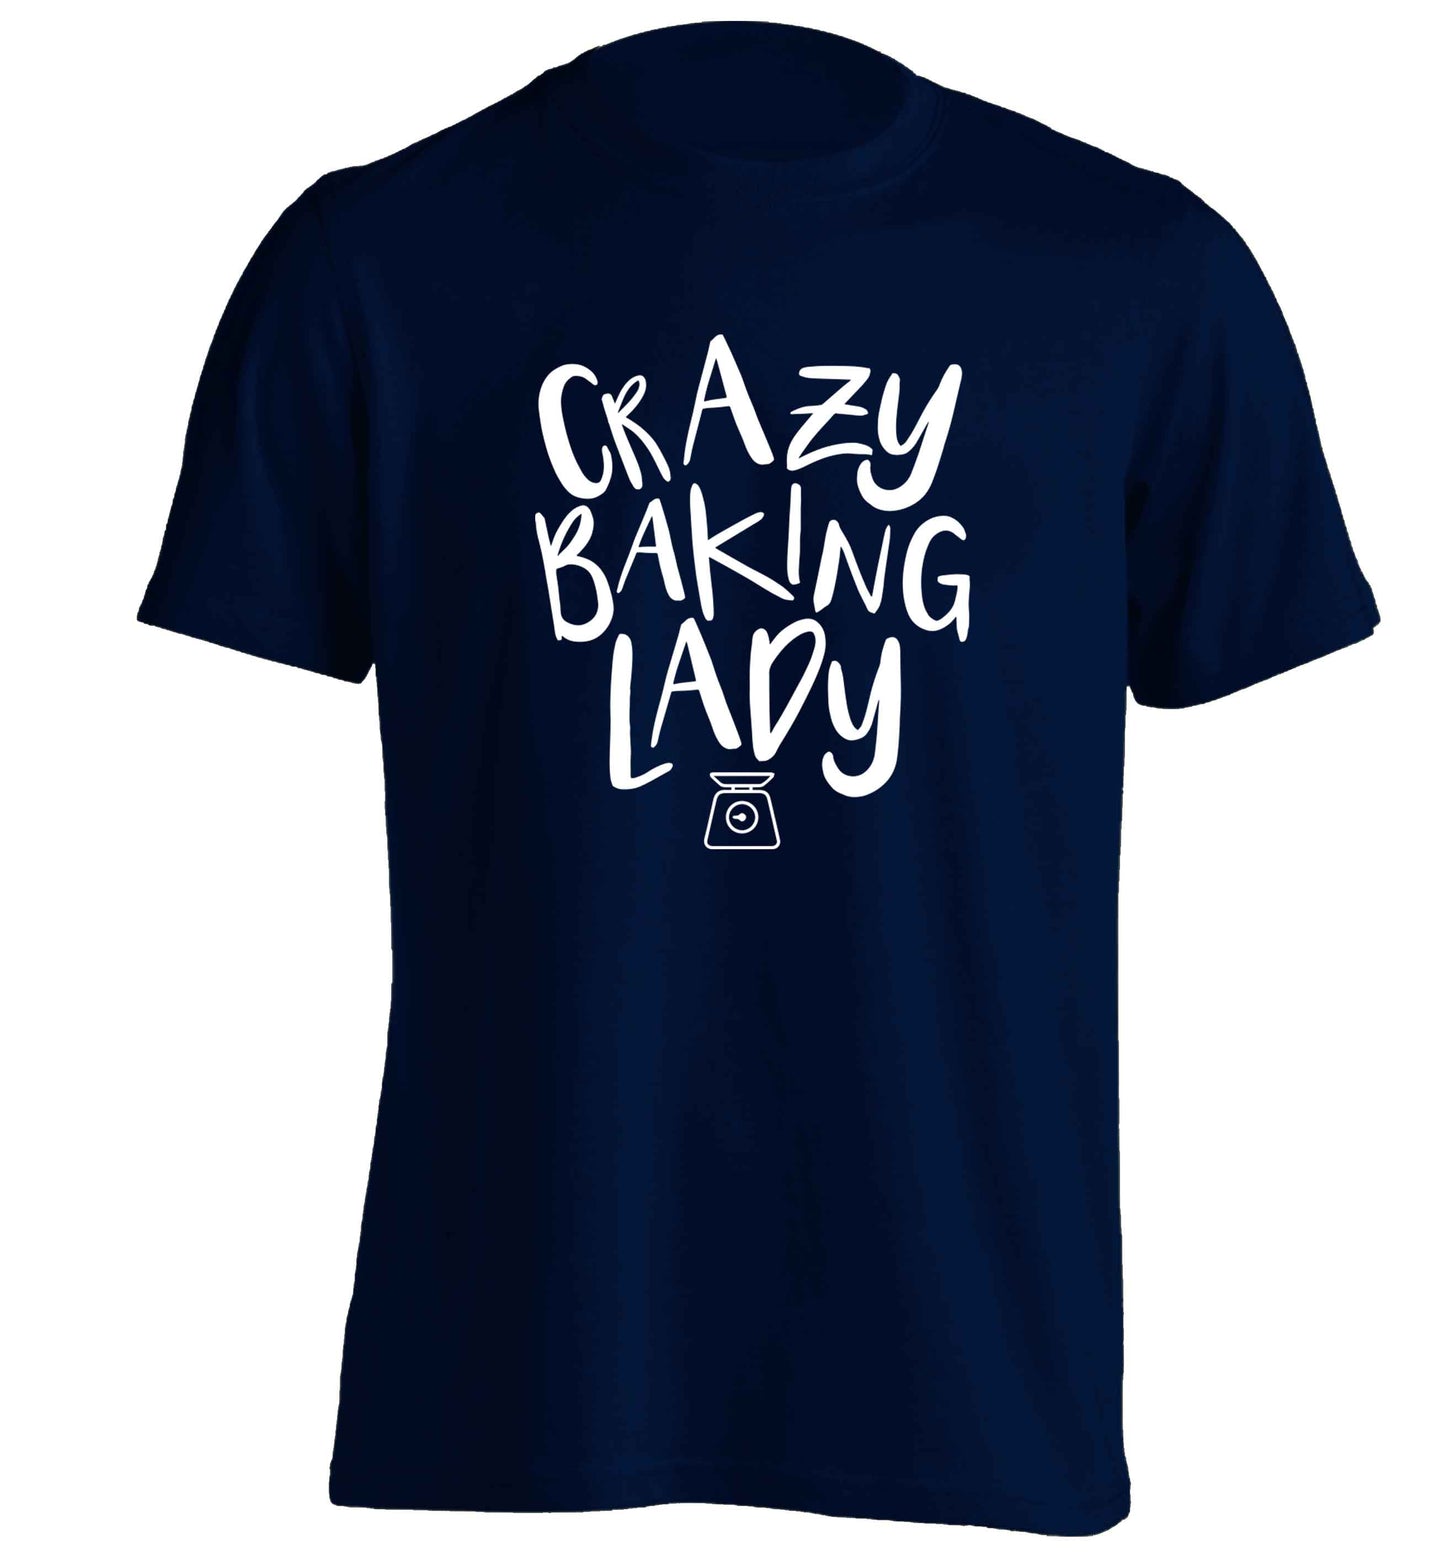 Crazy baking lady adults unisex navy Tshirt 2XL